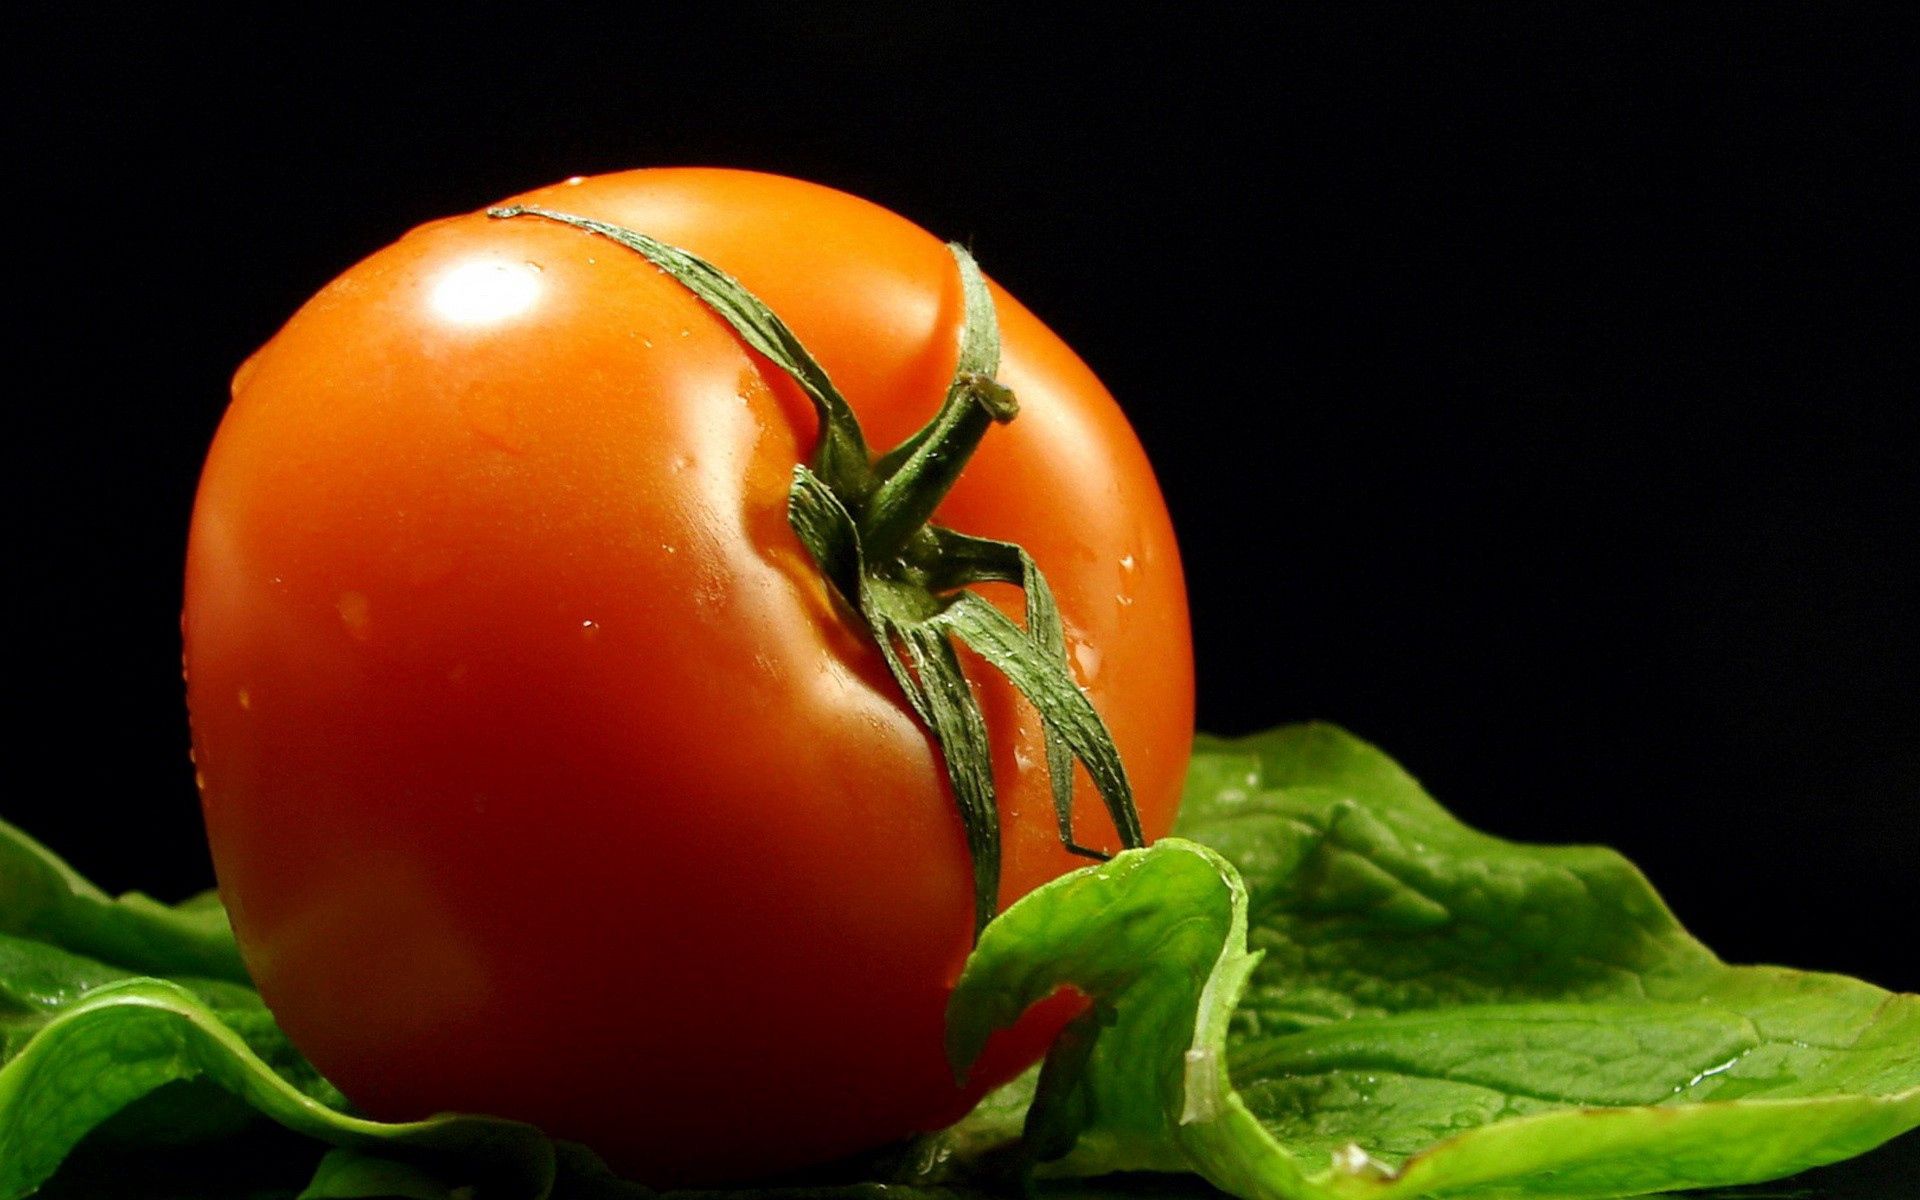 Tomato Widescreen image